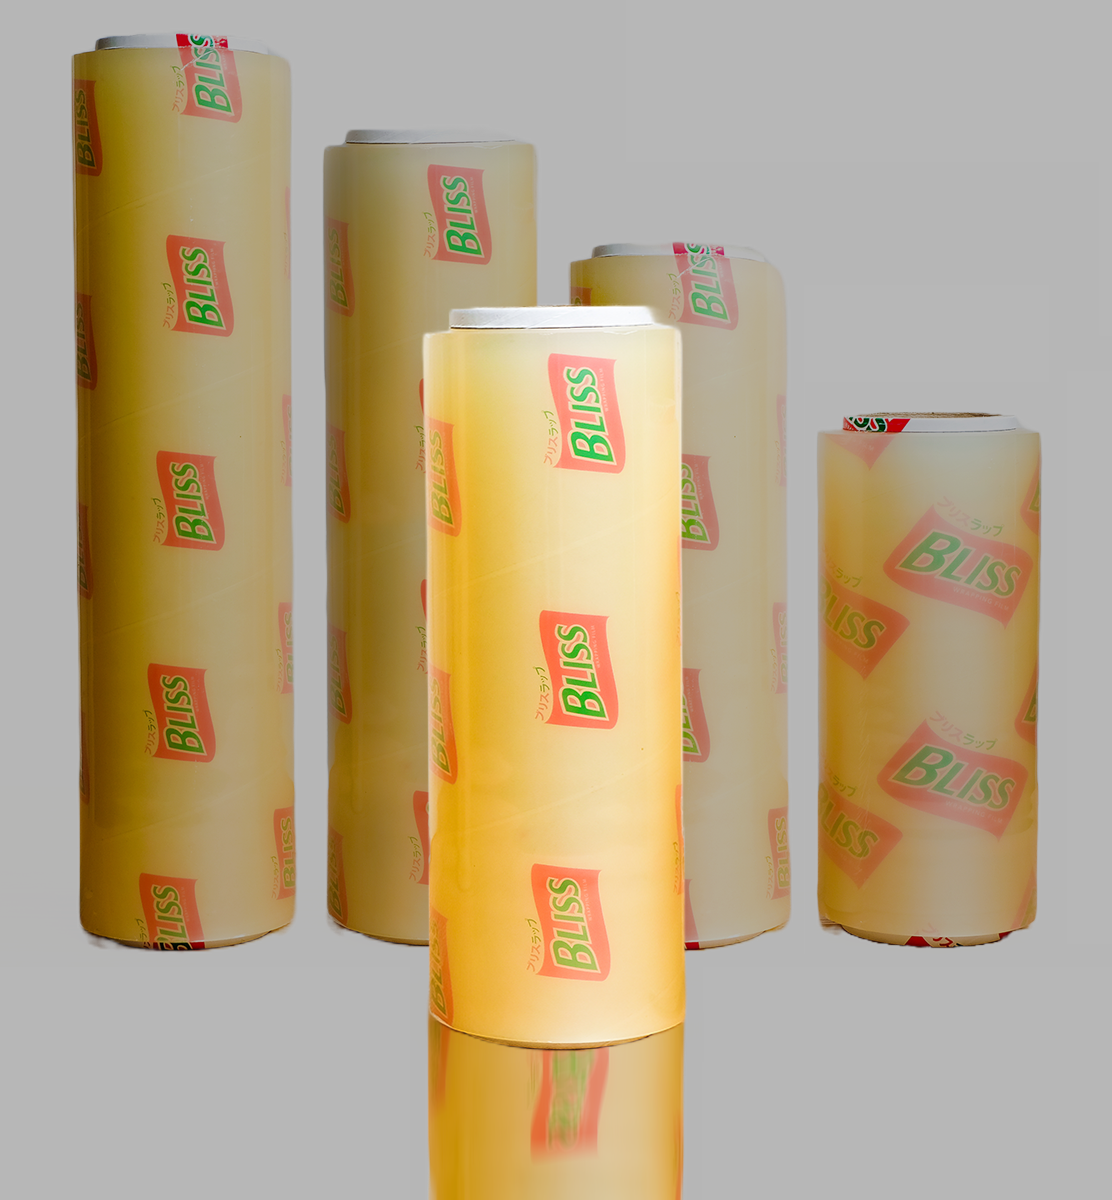 Bliss PVC Cling Wrap Plastik ukuran lebar 30cm. plastik pvc cling wrap terbaik lebih murah dan berkualitas dari best fresh, total, raypin bermerk bliss